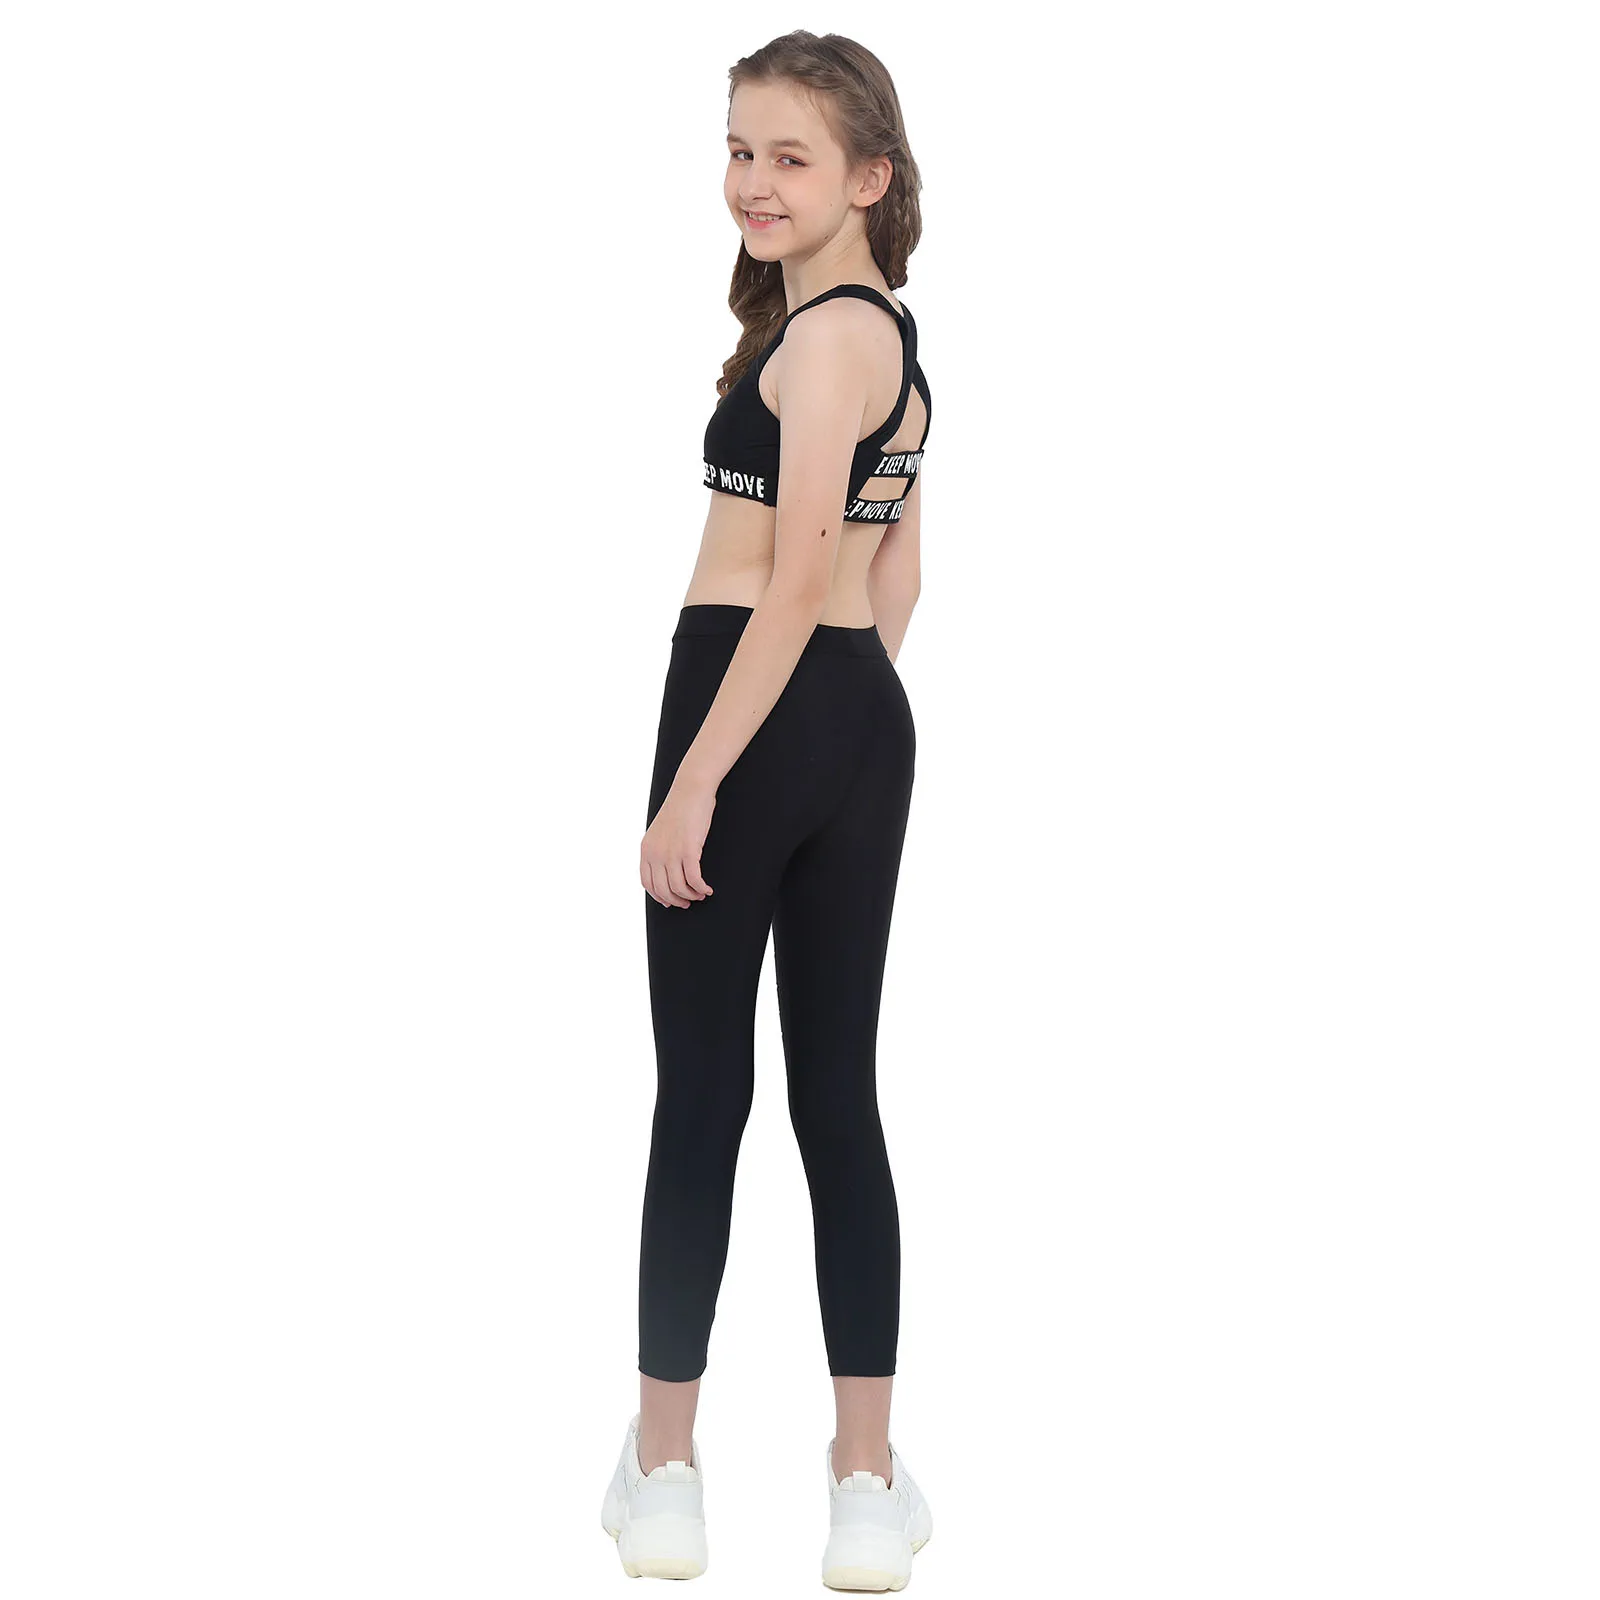 inhzoy Kids Big Girls Striped Side Stretchy Sports Pants Running Leggings Yoga Workout Sweatpants Casual